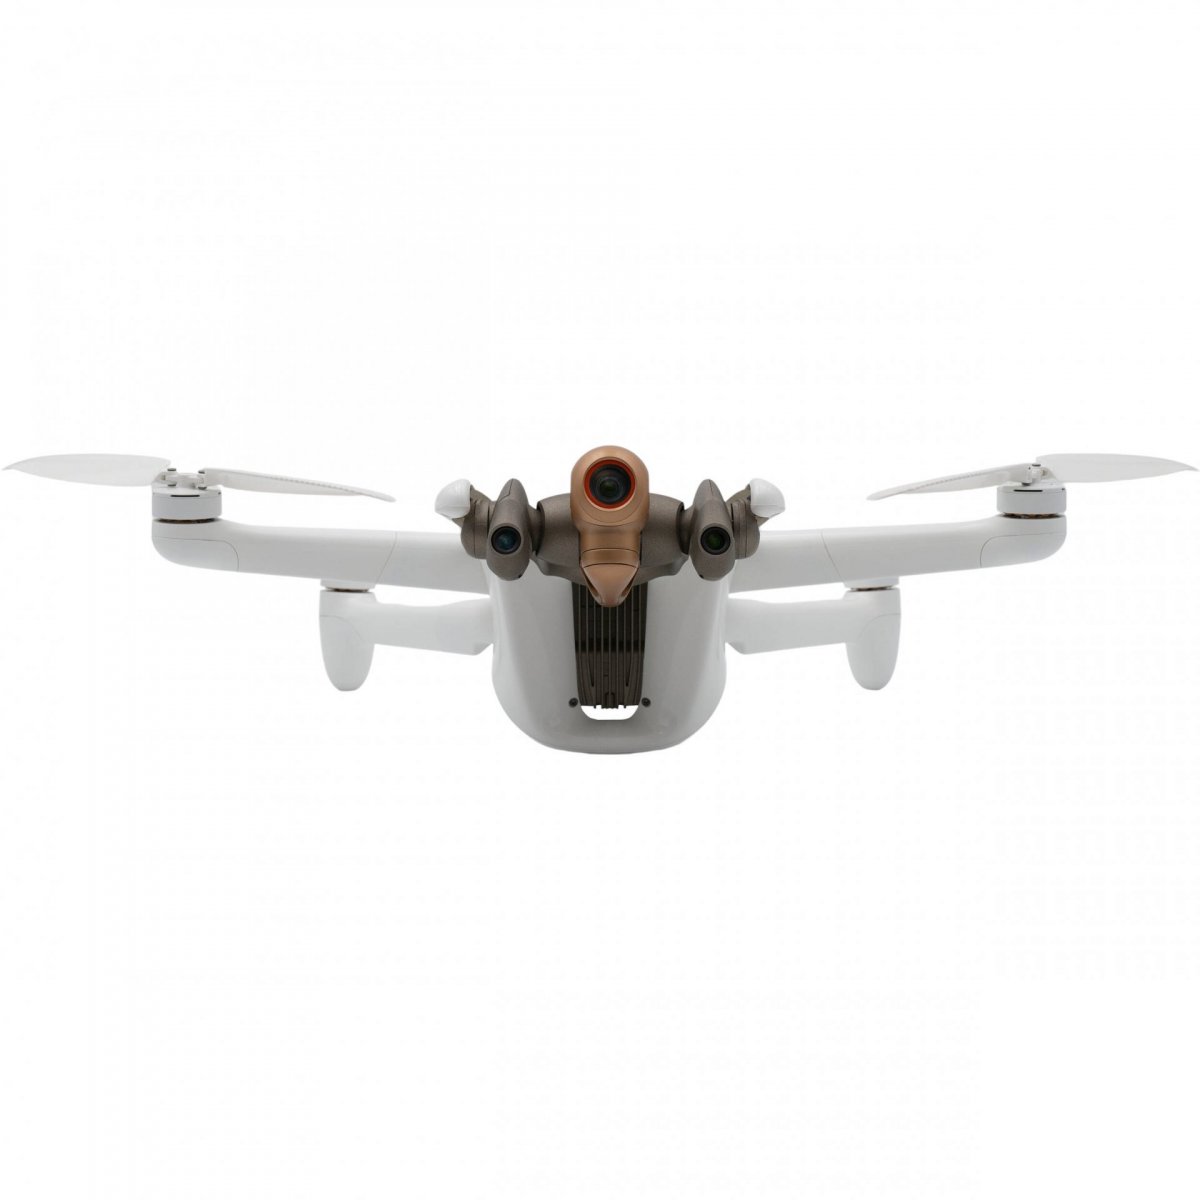 Robotický 4G dron ANAFI Ai pro fotogrammetrii zepředu